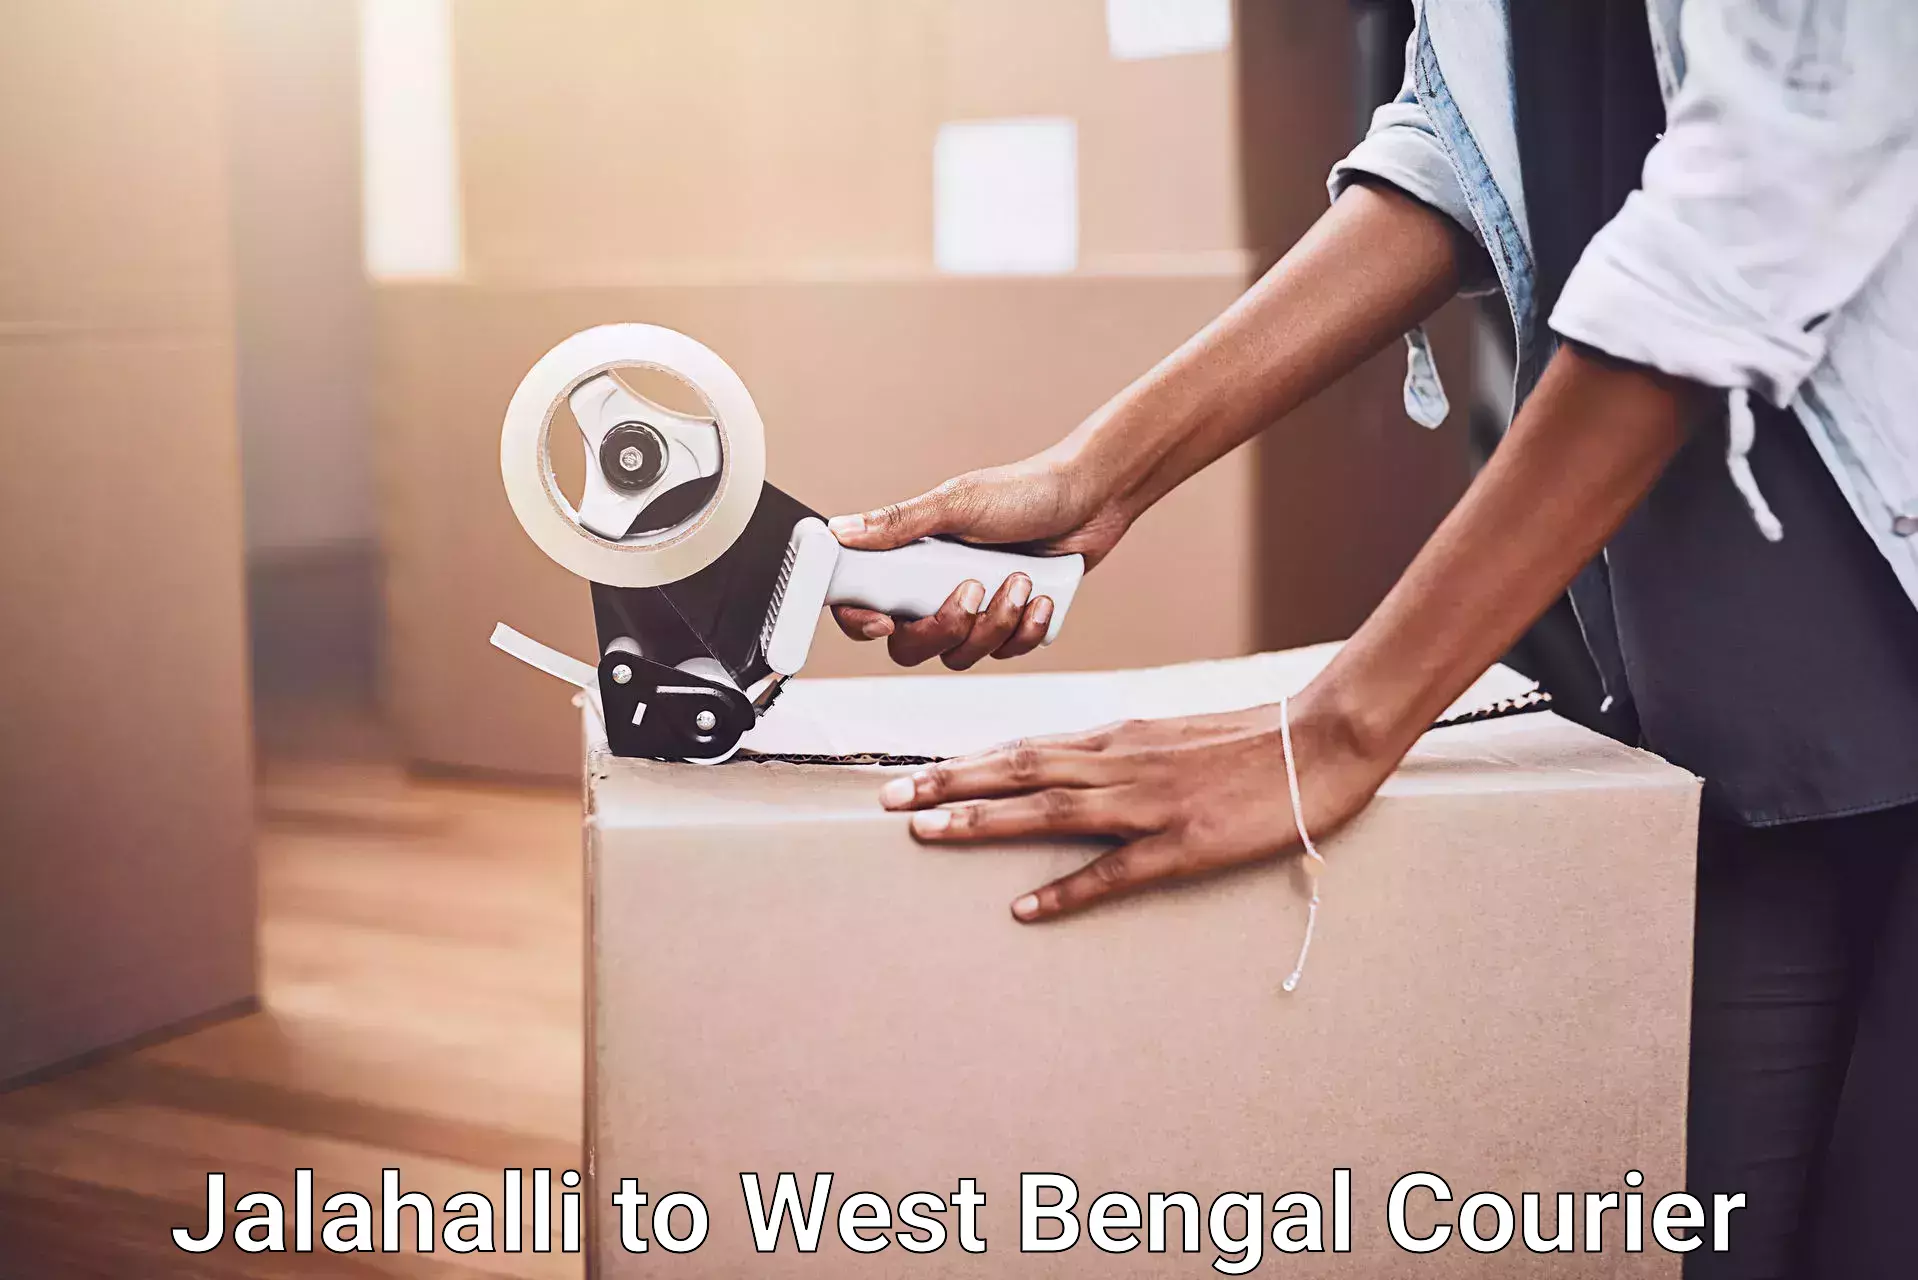 Furniture transport specialists Jalahalli to West Bengal